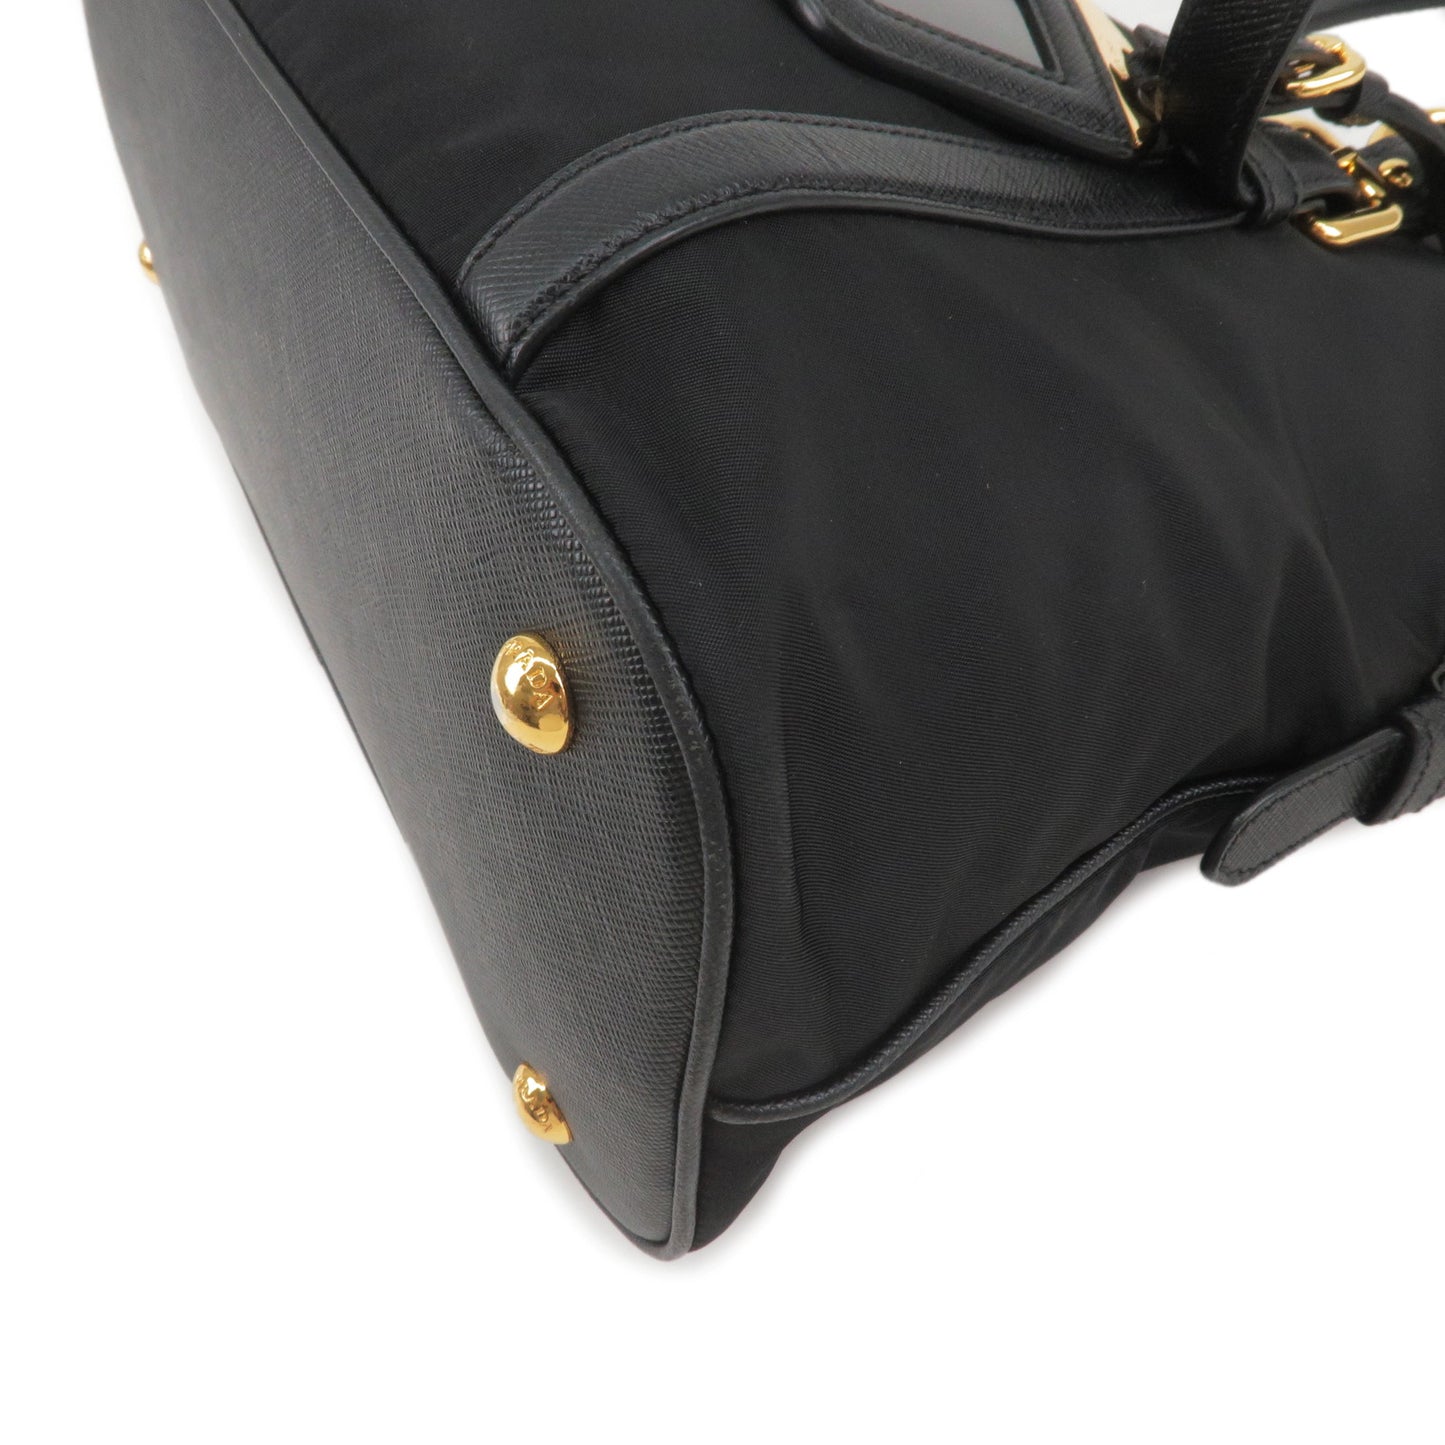 PRADA Logo Nylon Leather 2Way Bag Hand Bag Shoulder Bag Black